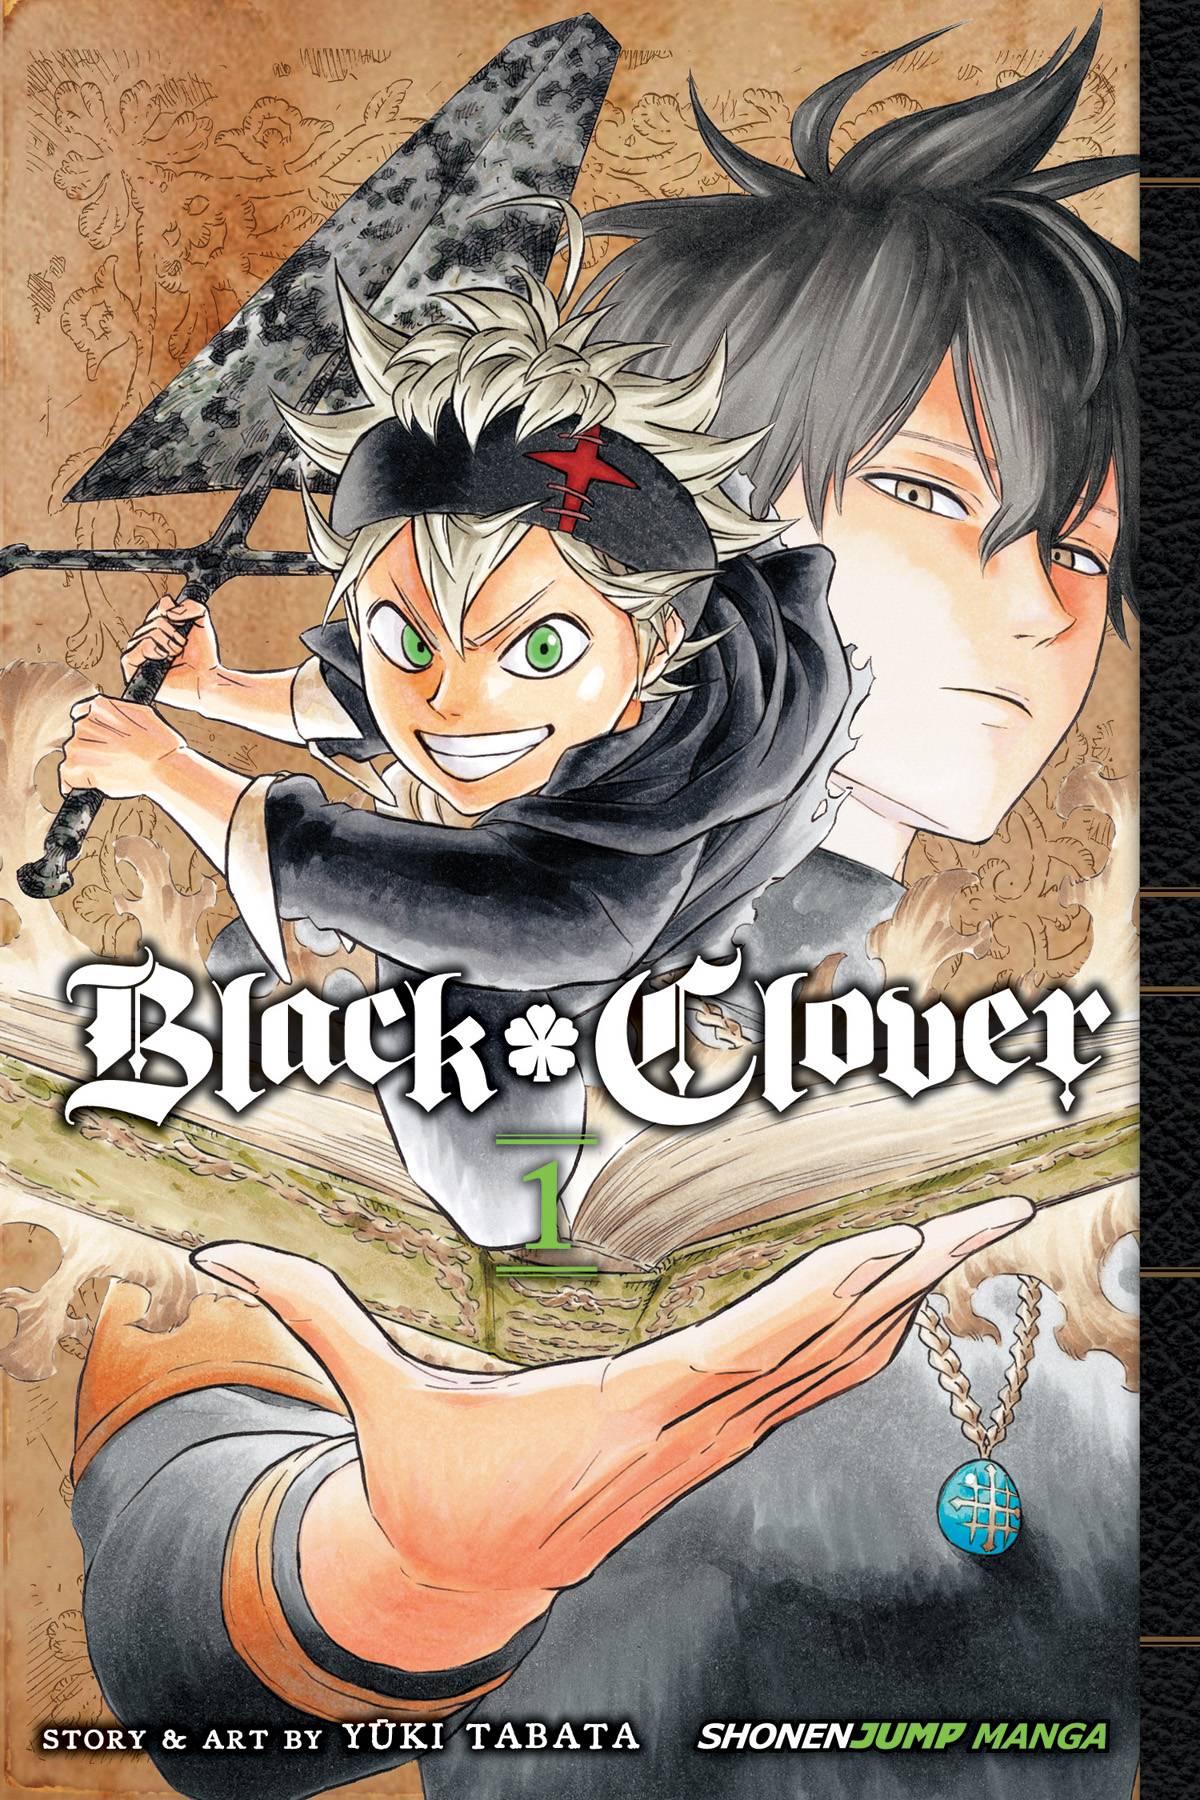 Black Clover Vol. 01 (C: 1-0-1)